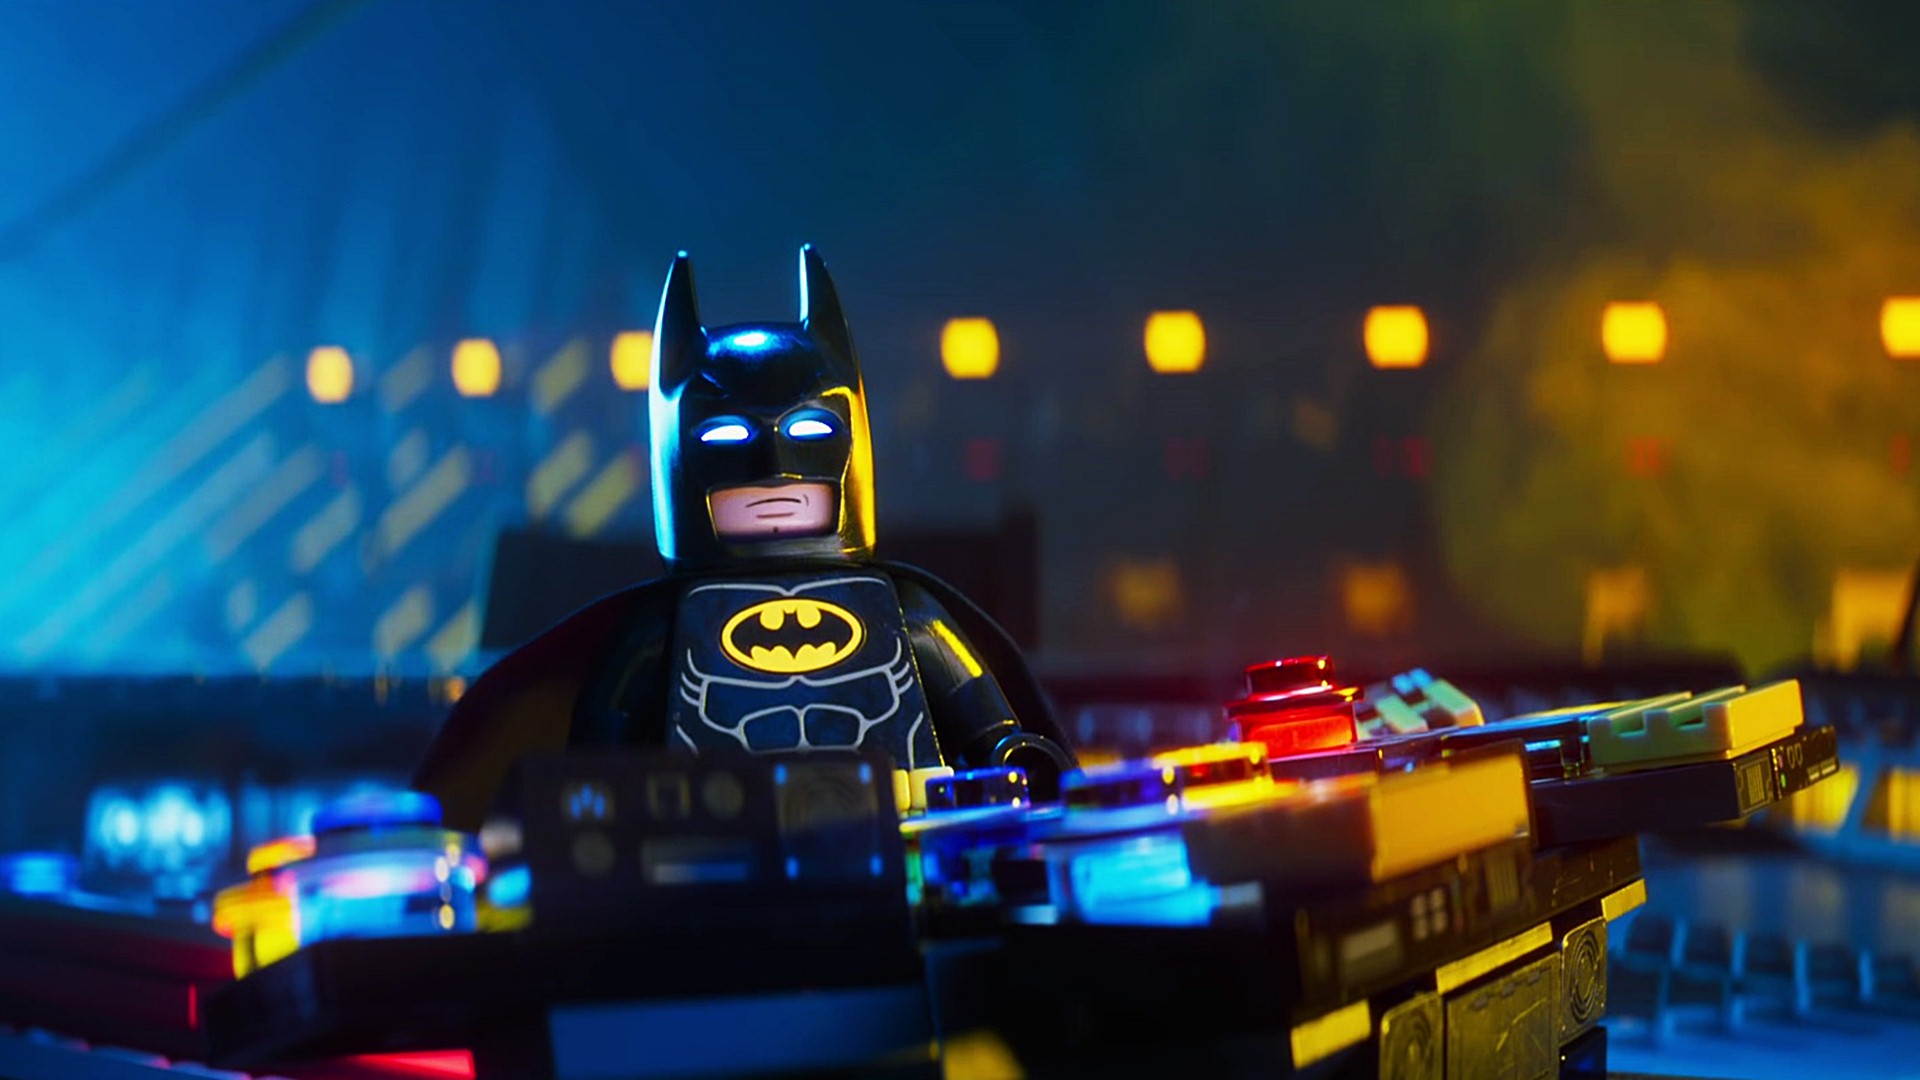 Free download The Lego Batman Movie Wallpaper 13 1920 X 1080 stmednet  [1920x1080] for your Desktop, Mobile & Tablet | Explore 33+ The LEGO Batman  Movie Wallpapers | Batman Movie Wallpaper, The Batman Wallpaper, Lego  Batman Wallpaper